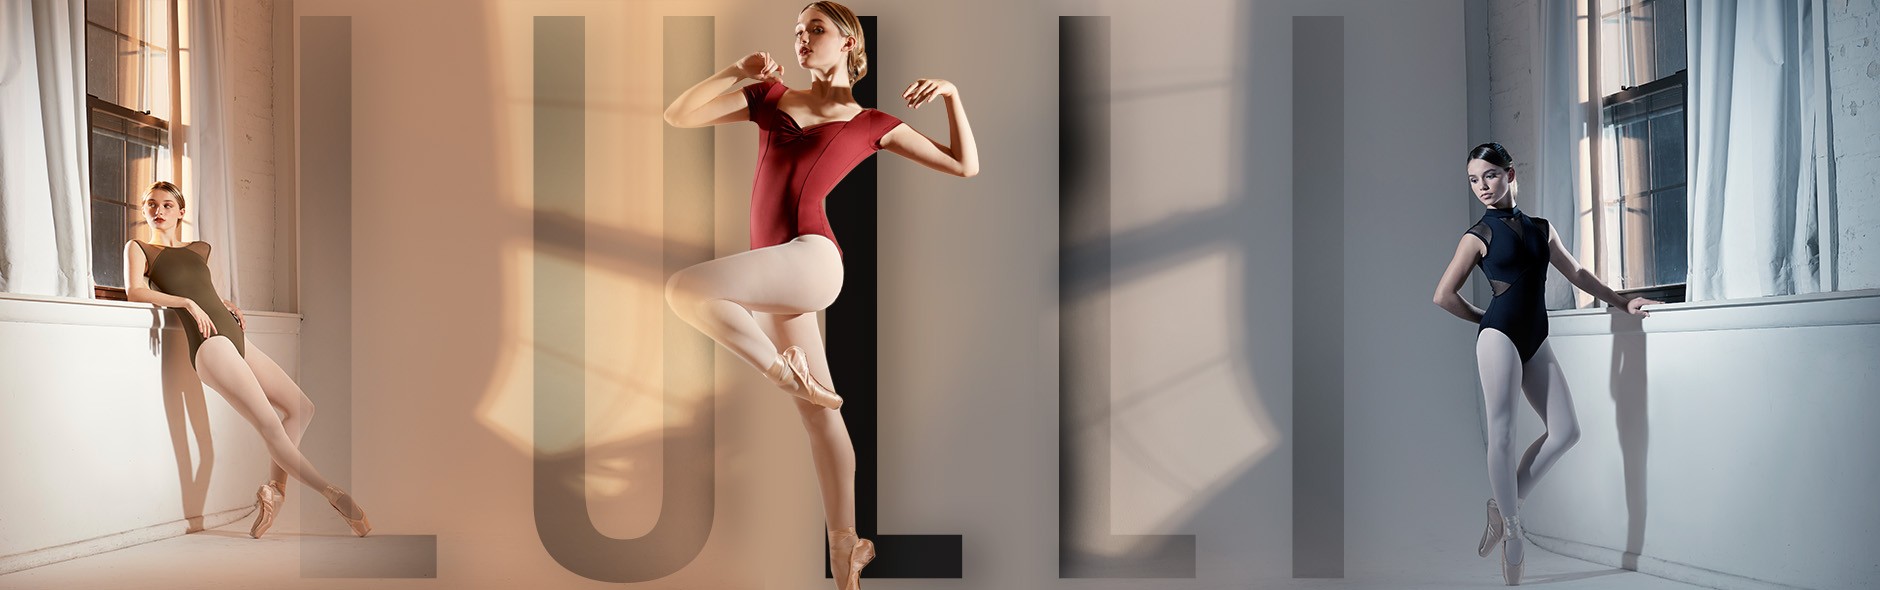 Aita Dance: Dance shoes, Dancewear, Accessories - Classical Ballet